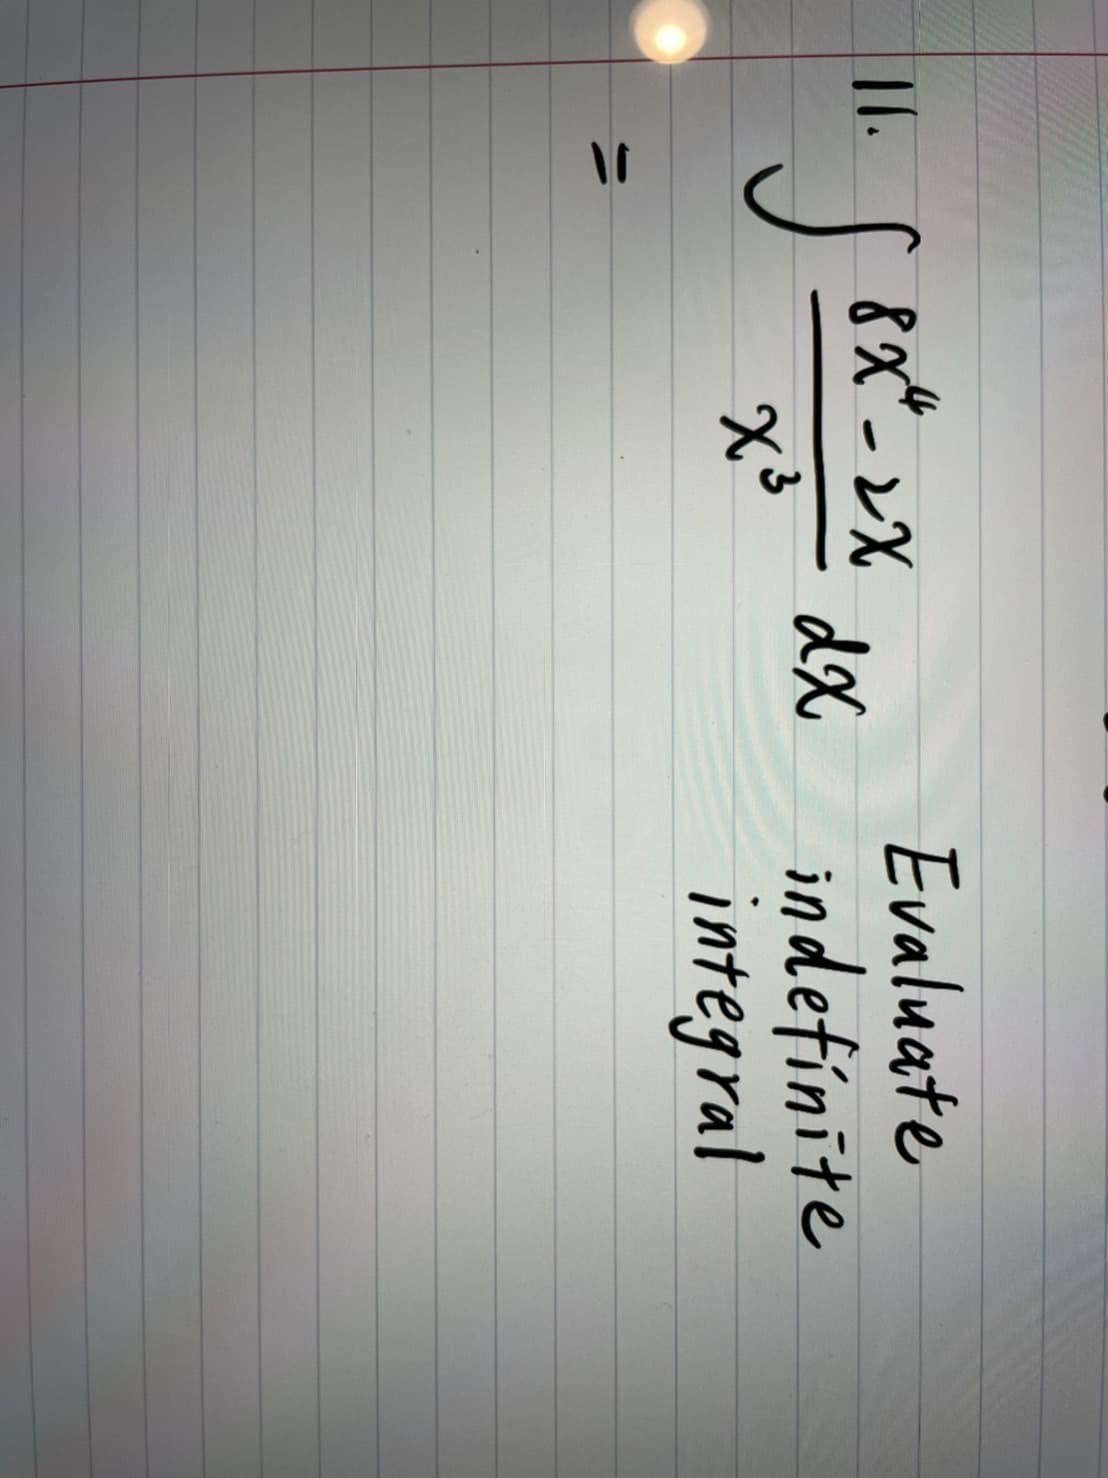 11.
8X² 2X
58x
Sex²-xx dx.
3
X³
>
Evaluate
indefinite
integral